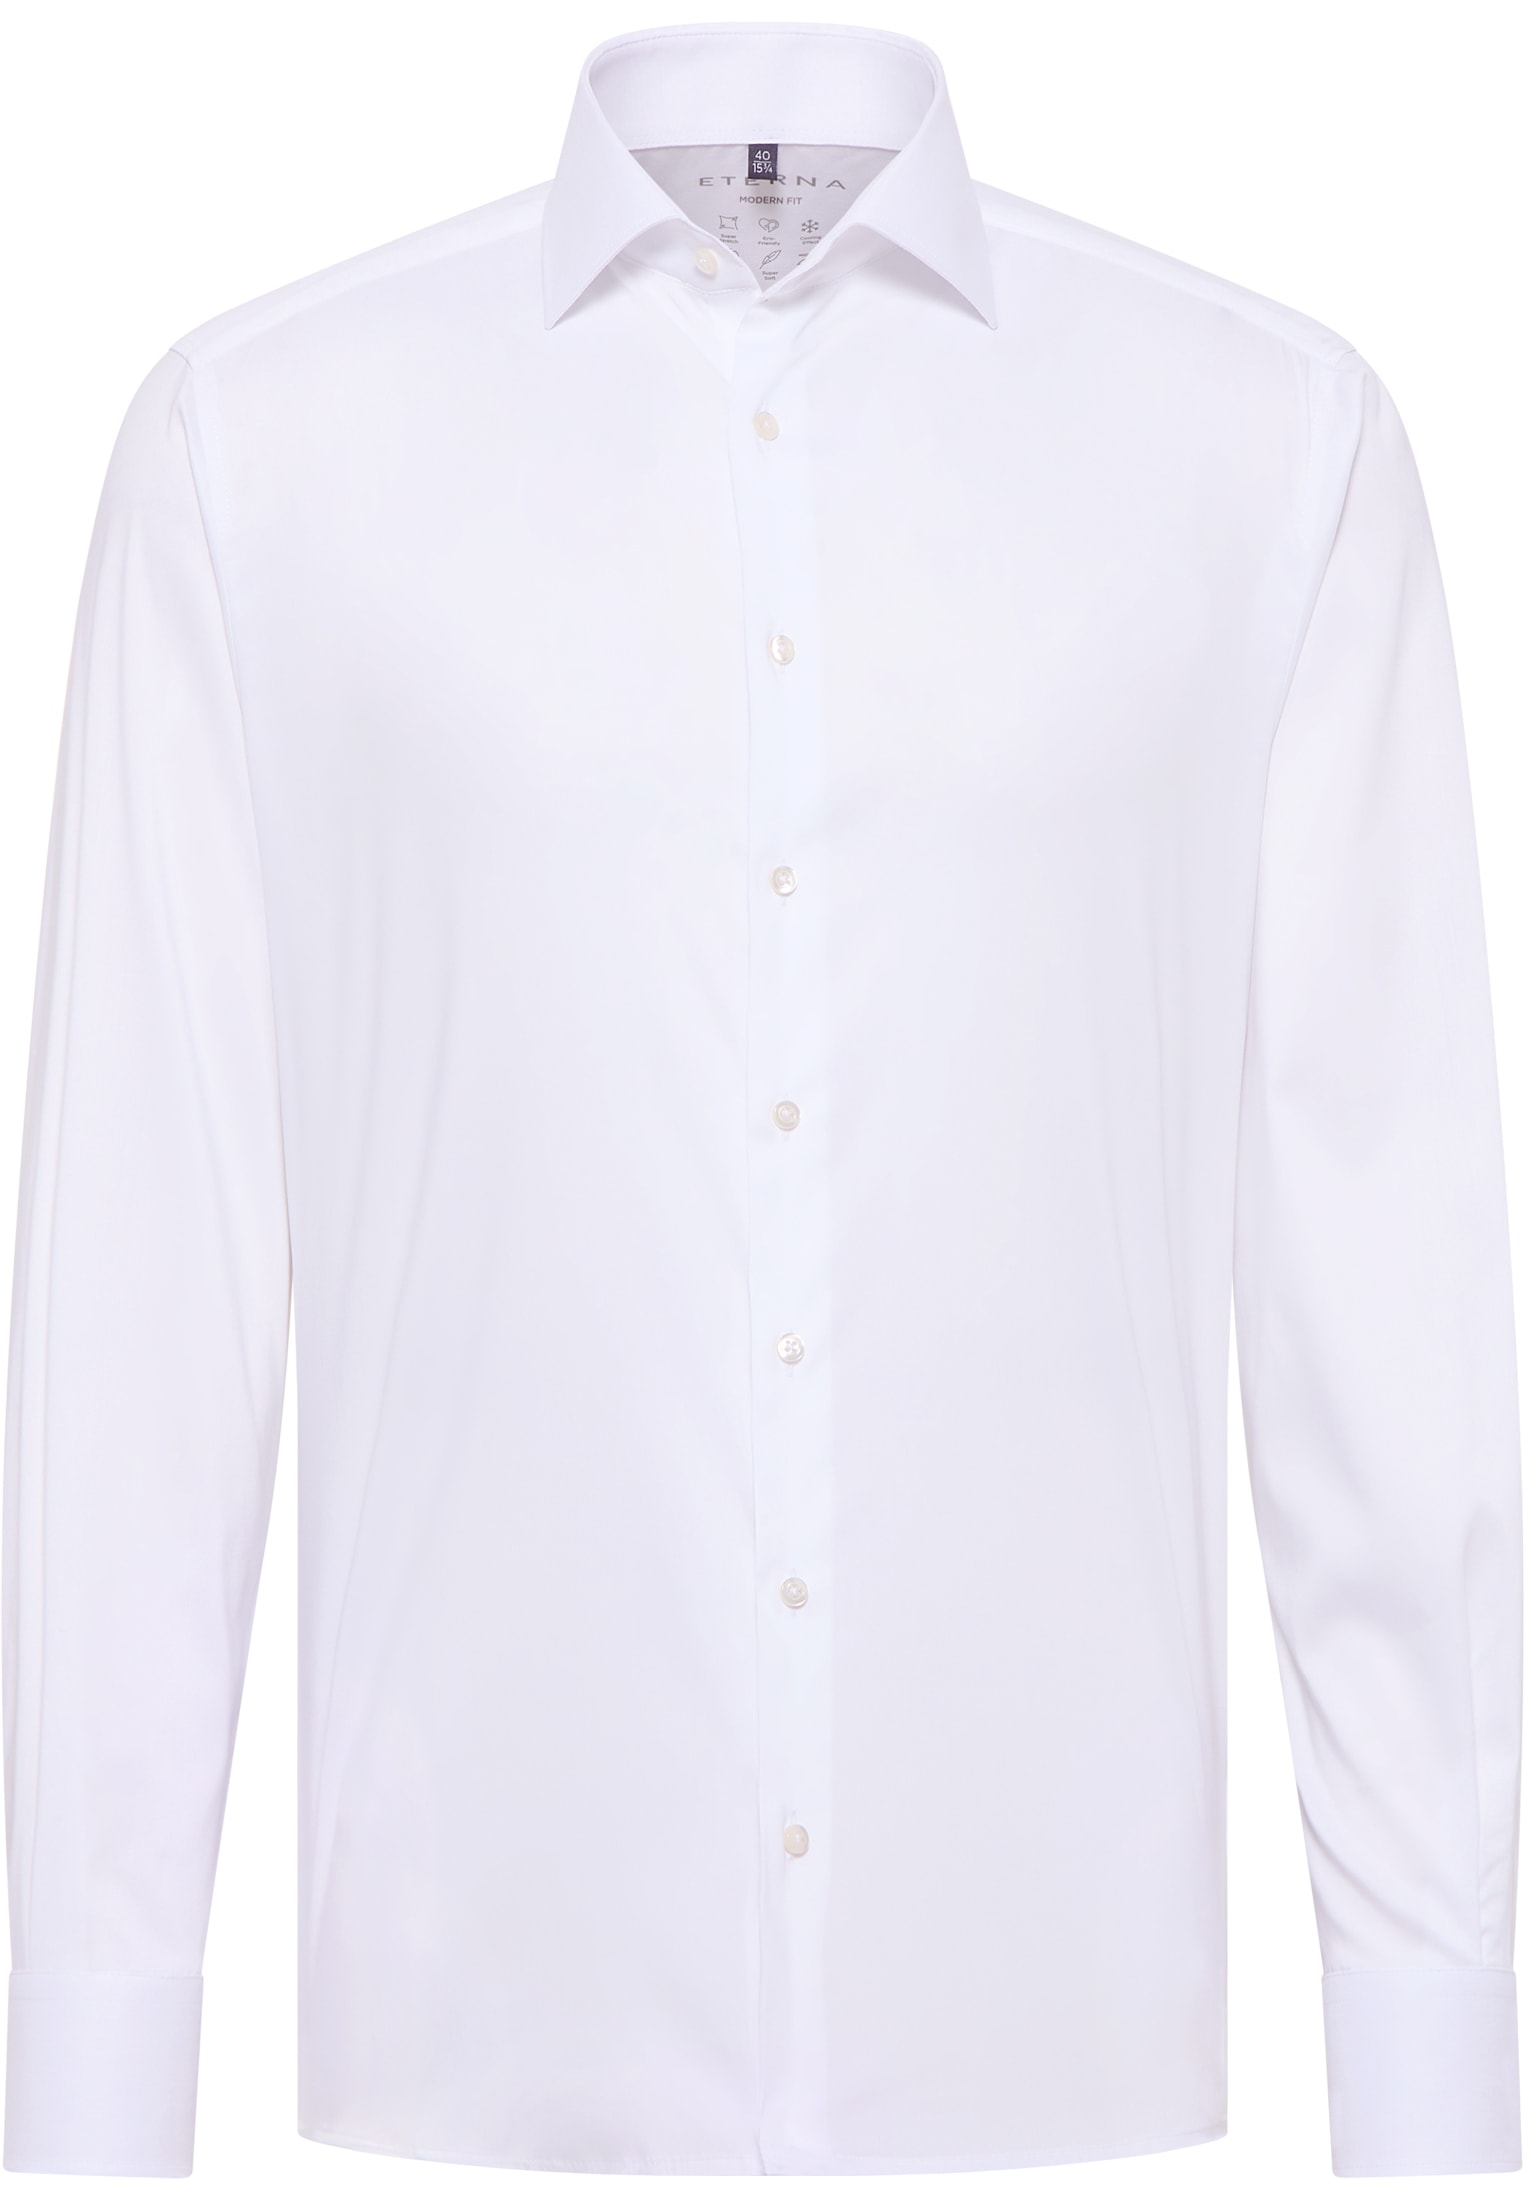 weiß | Shirt MODERN unifarben in | Langarm 1SH02224-00-01-39-1/1 | 39 weiß FIT Performance |